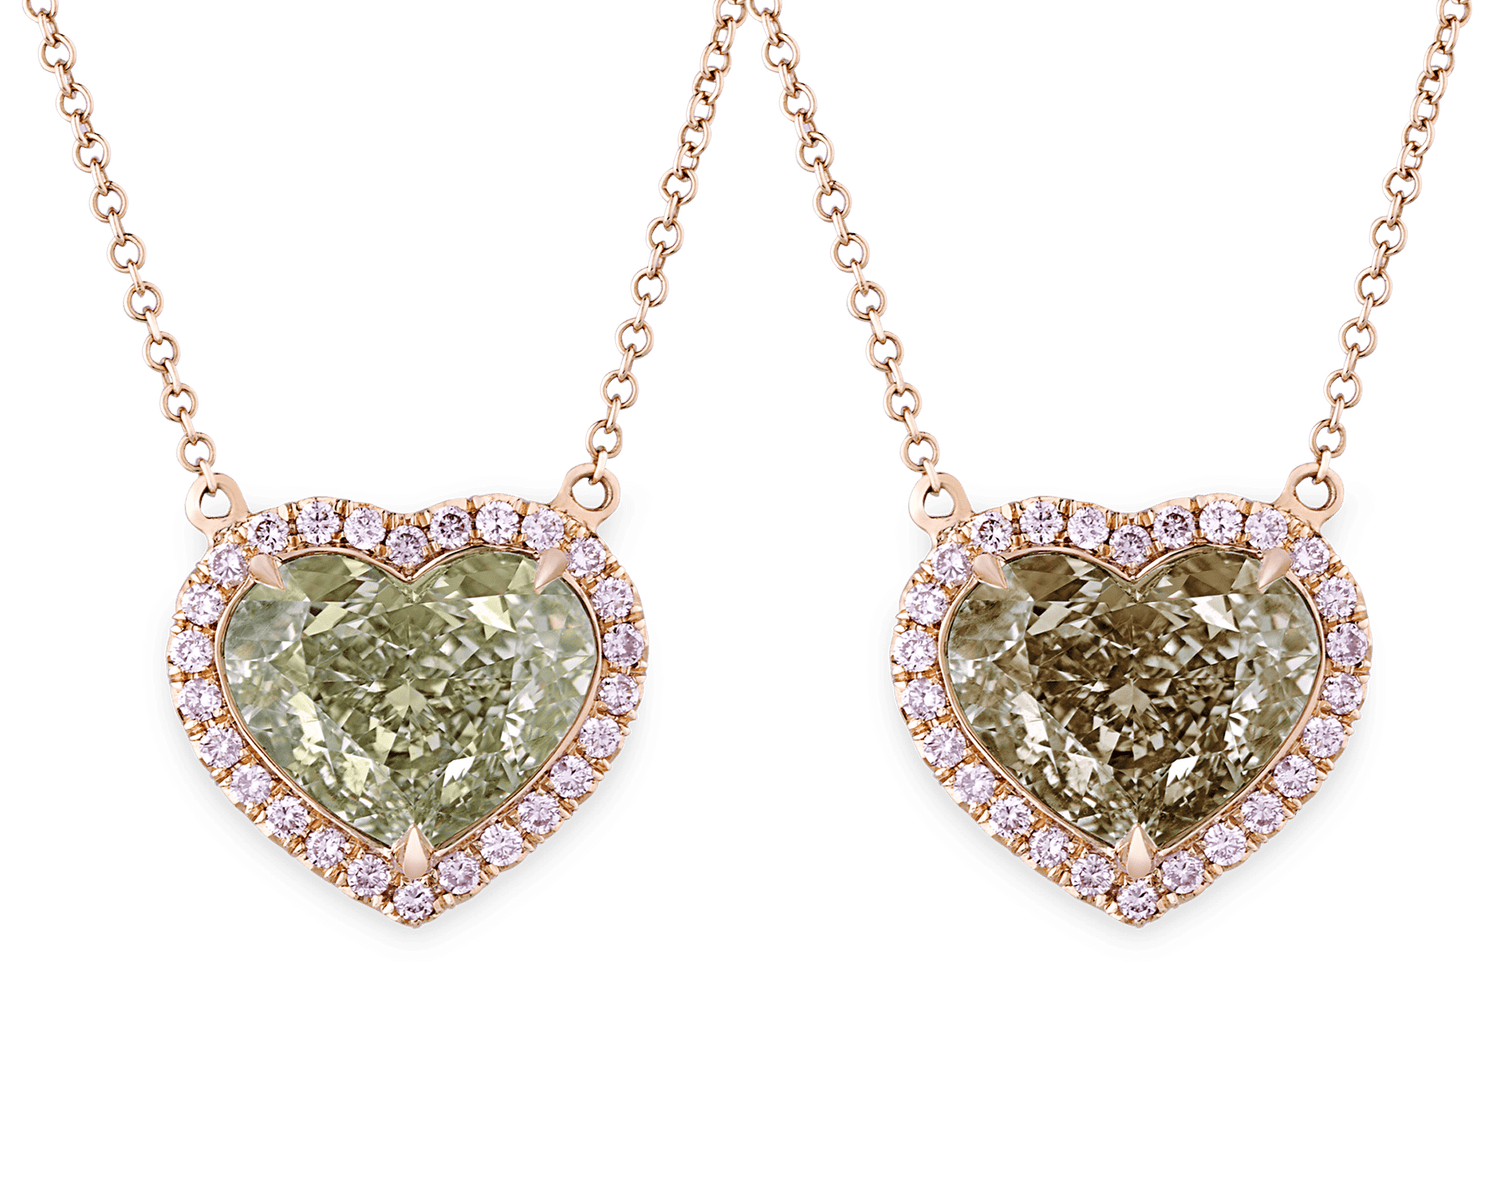 Chameleon Diamond Necklace, 4.41 Carats